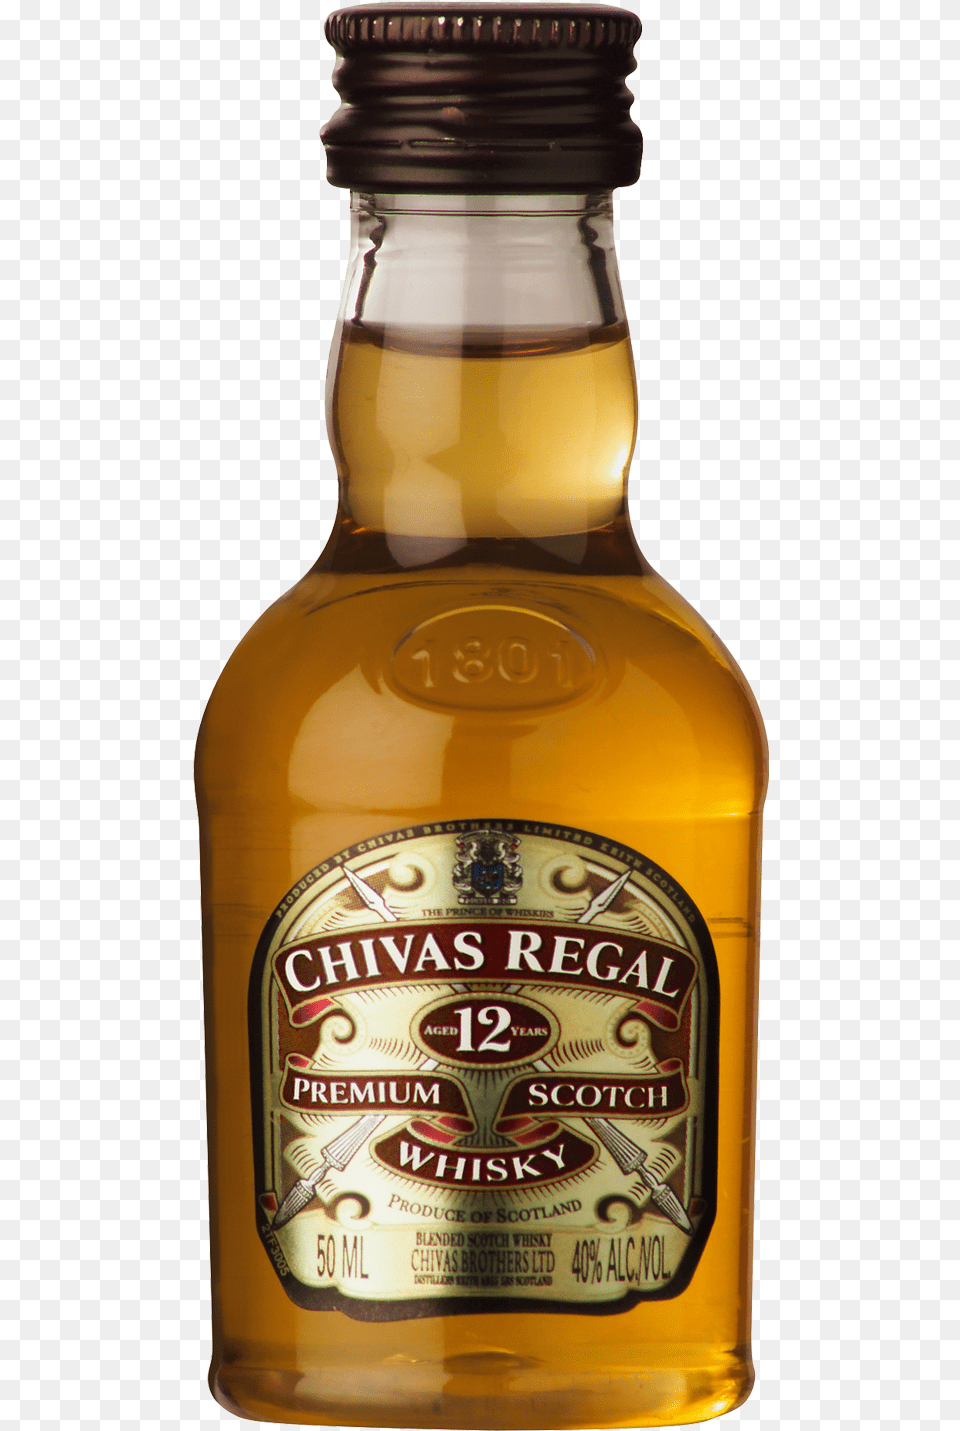 Details About Chivas Regal 12 Year Old Scotch Whisky 50 Ml Chivas Regal, Alcohol, Beer, Beverage, Liquor Png